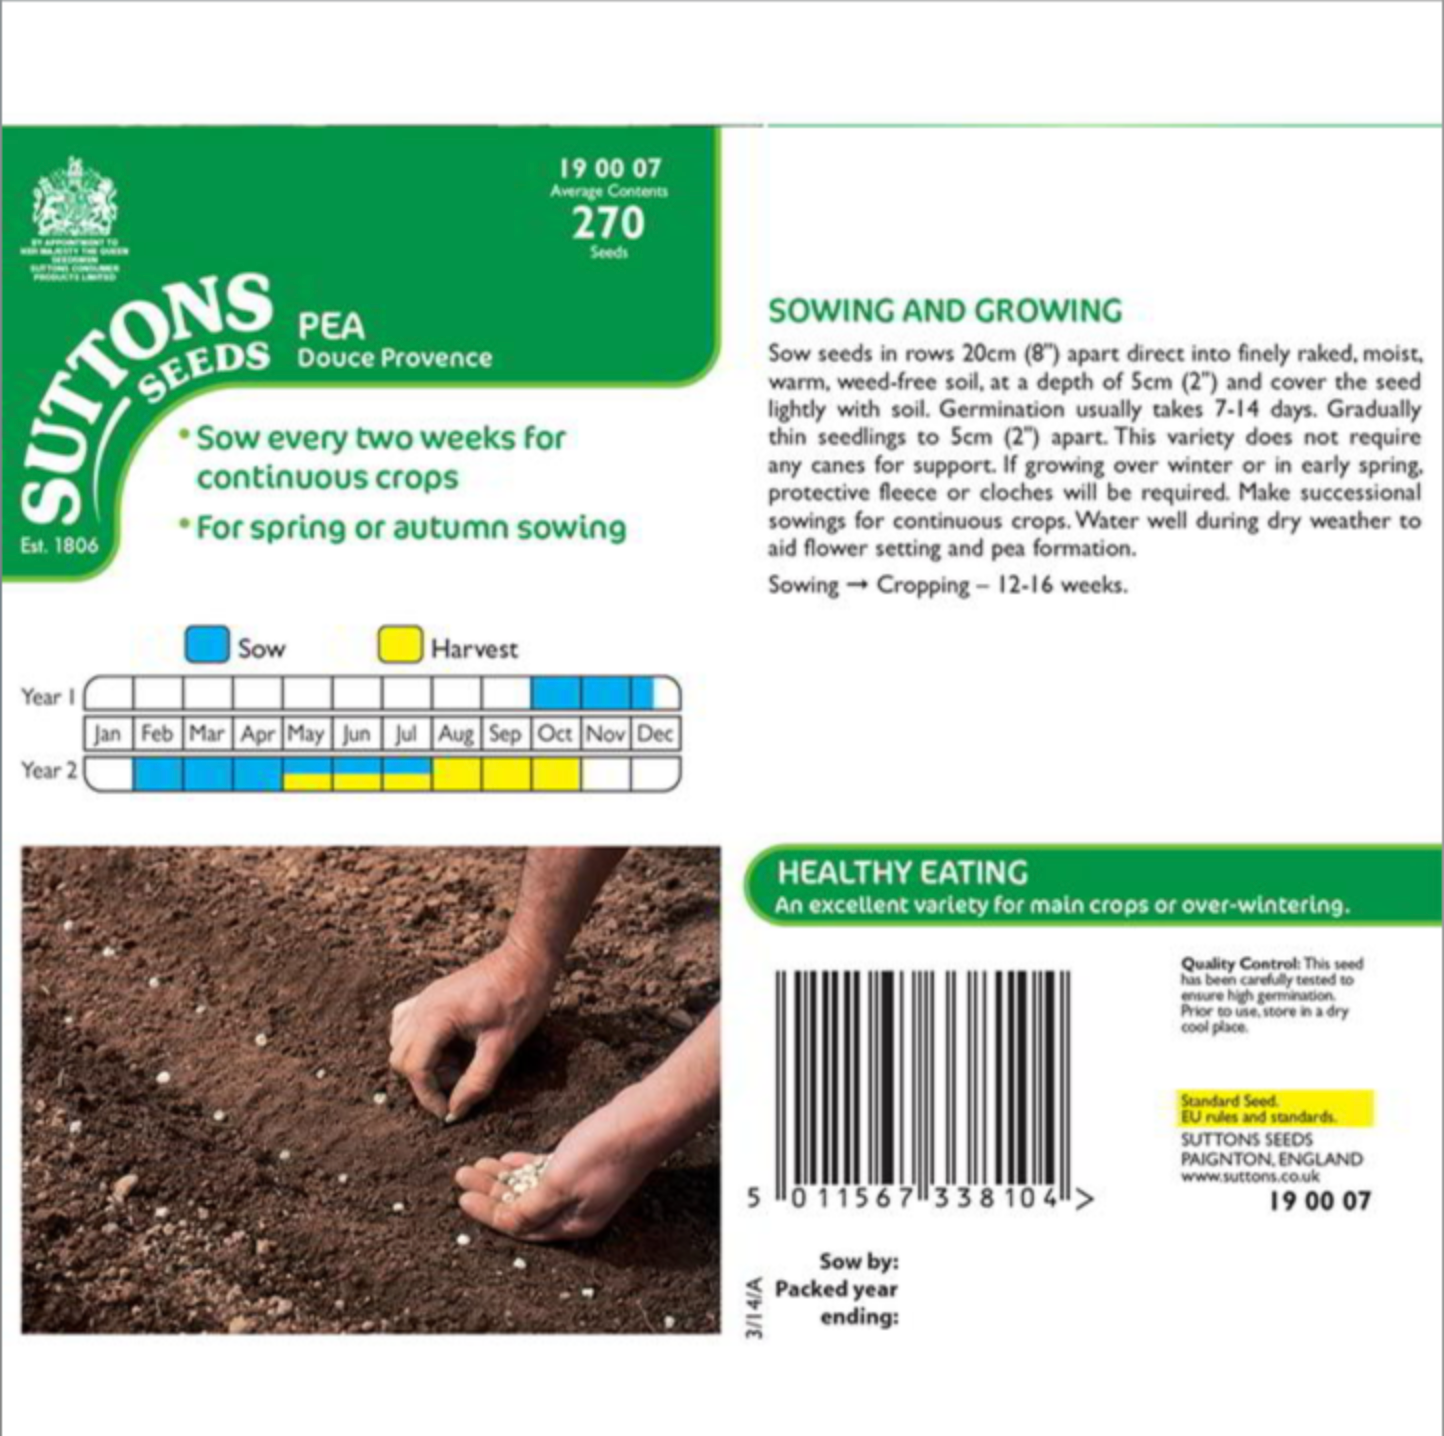 Suttons Pea Seeds - 5 Varieties